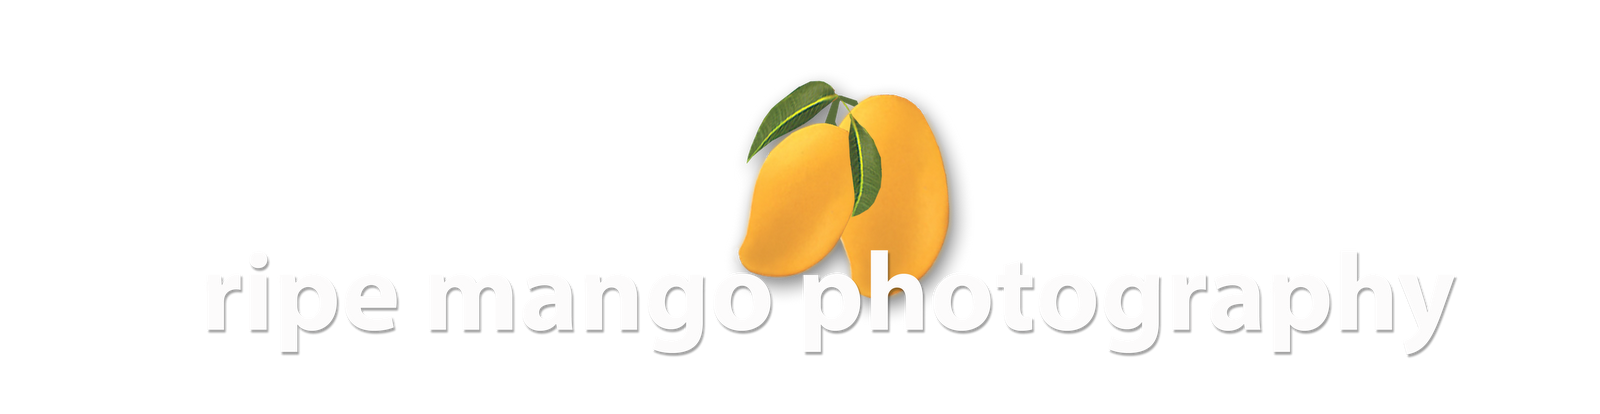 ripe mango photography